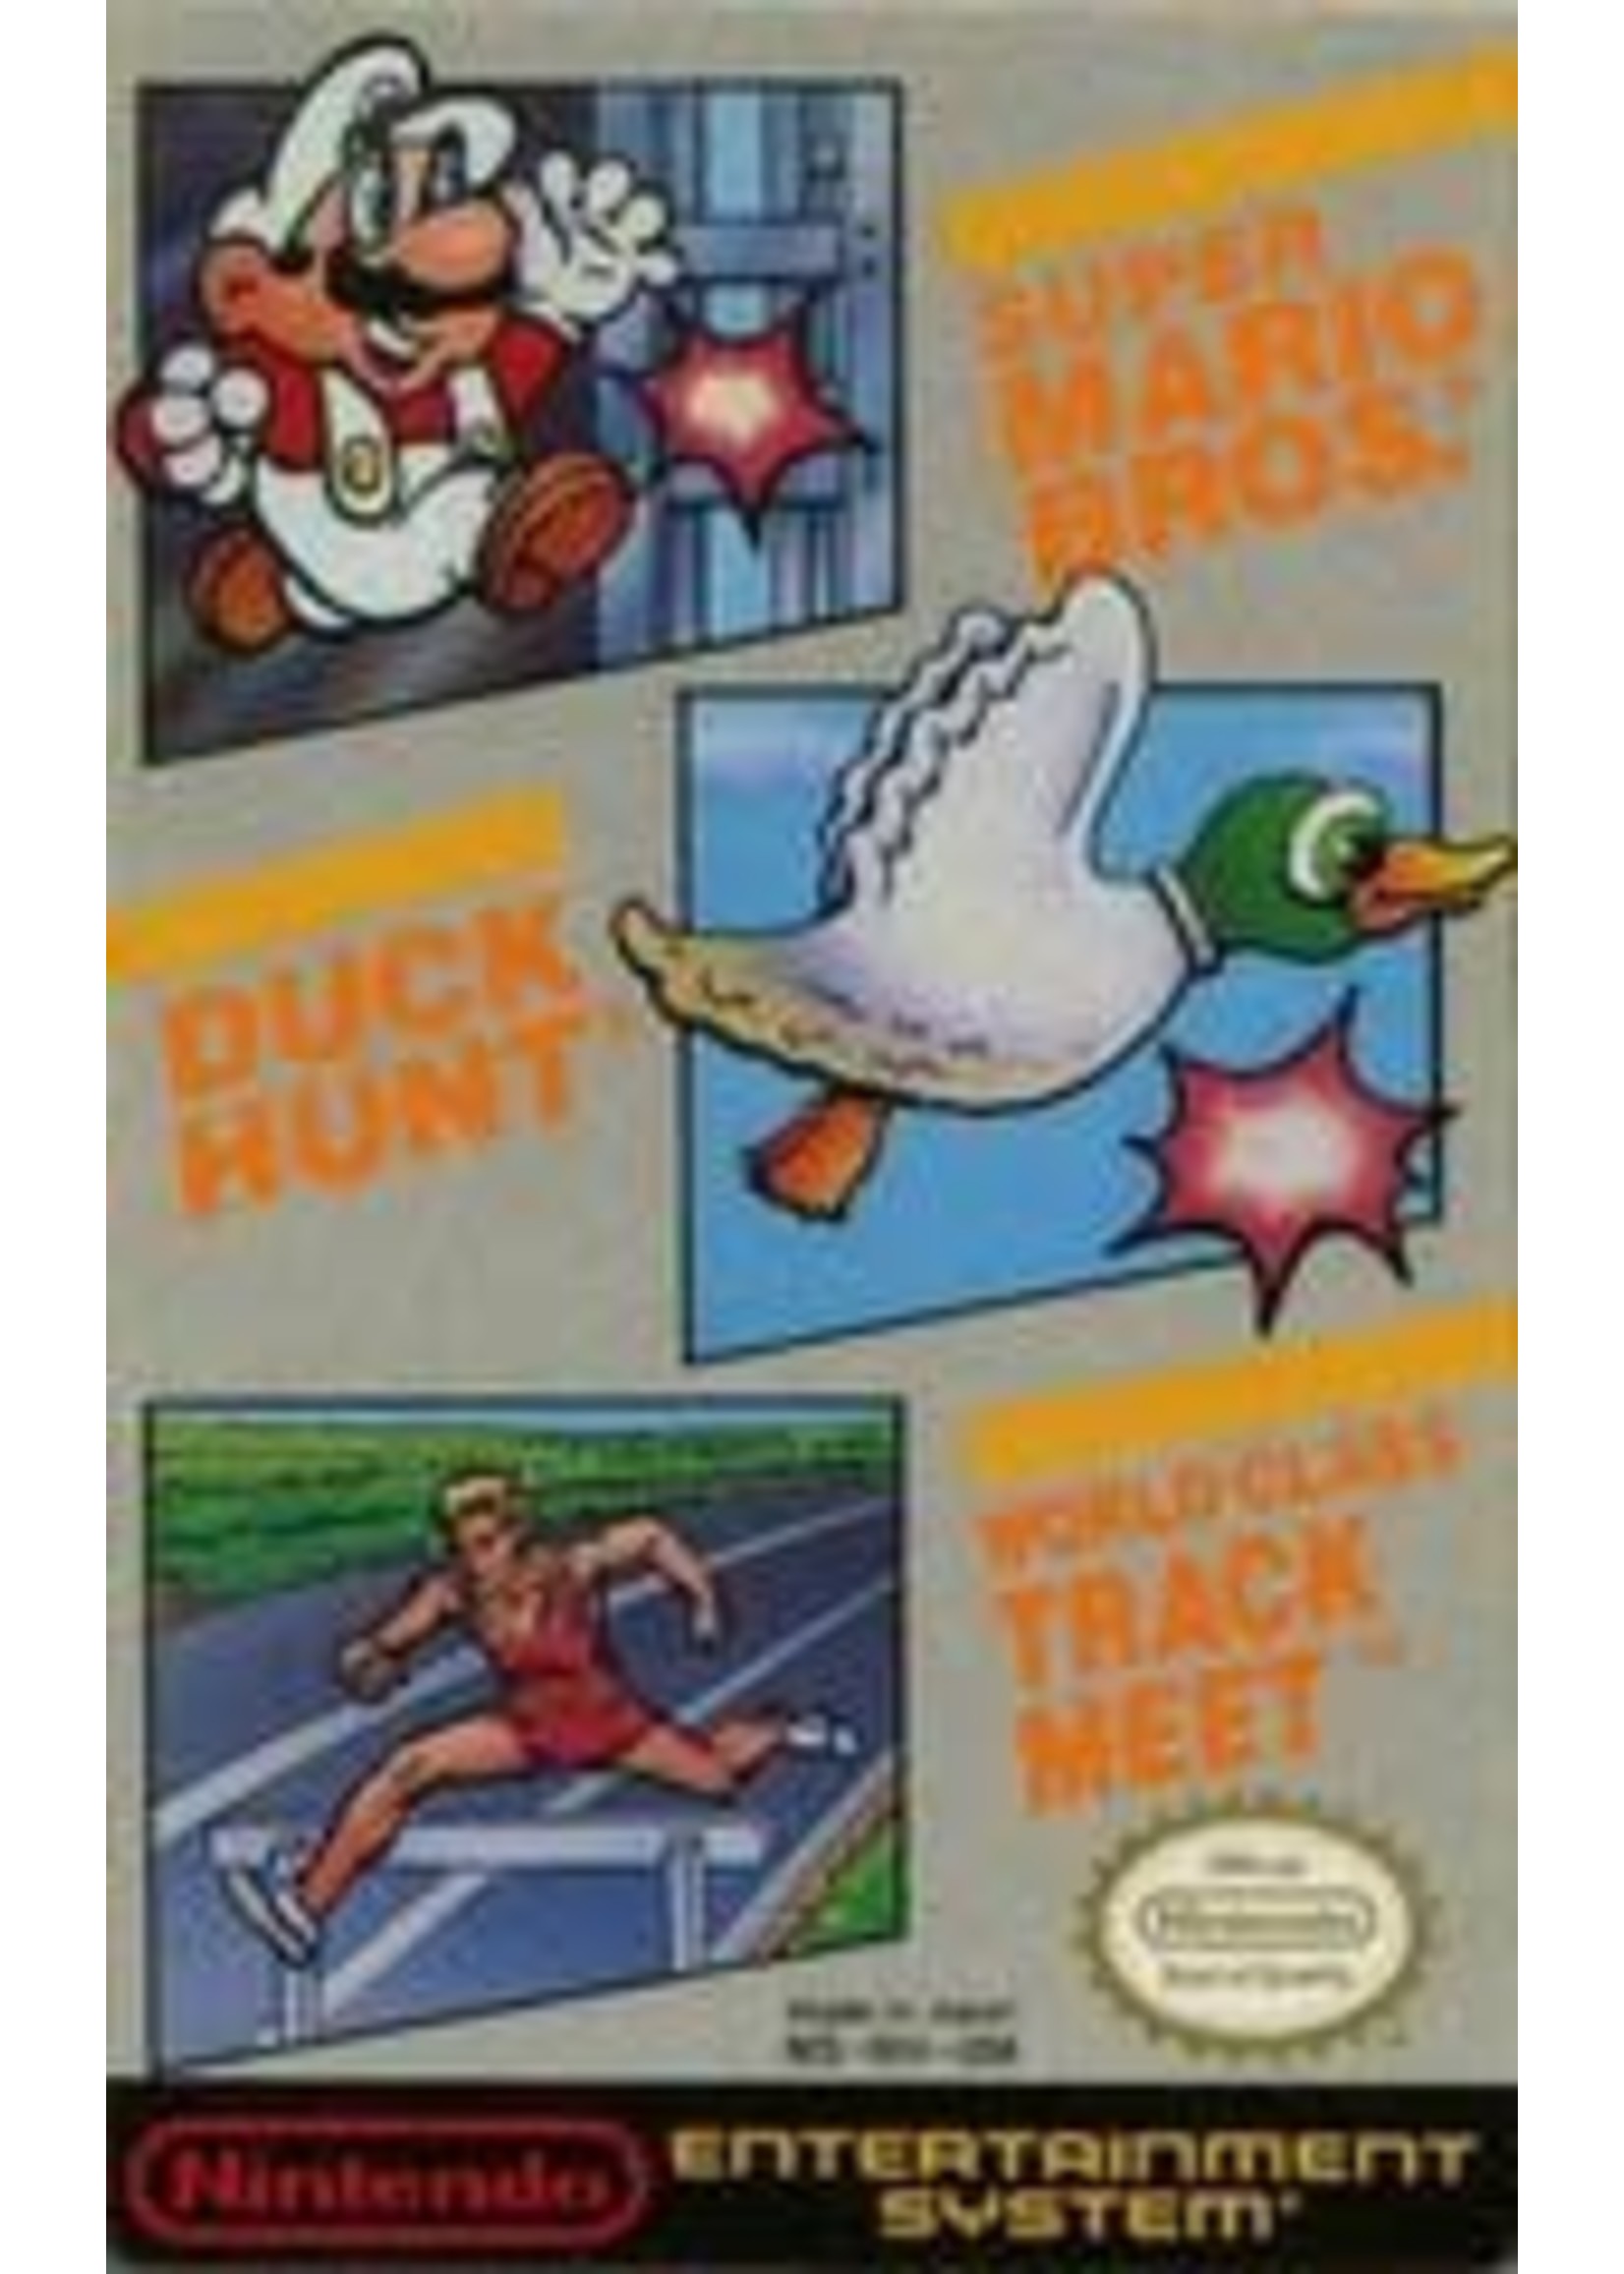 Super Mario Bros Duck Hunt World Class Track Meet NES